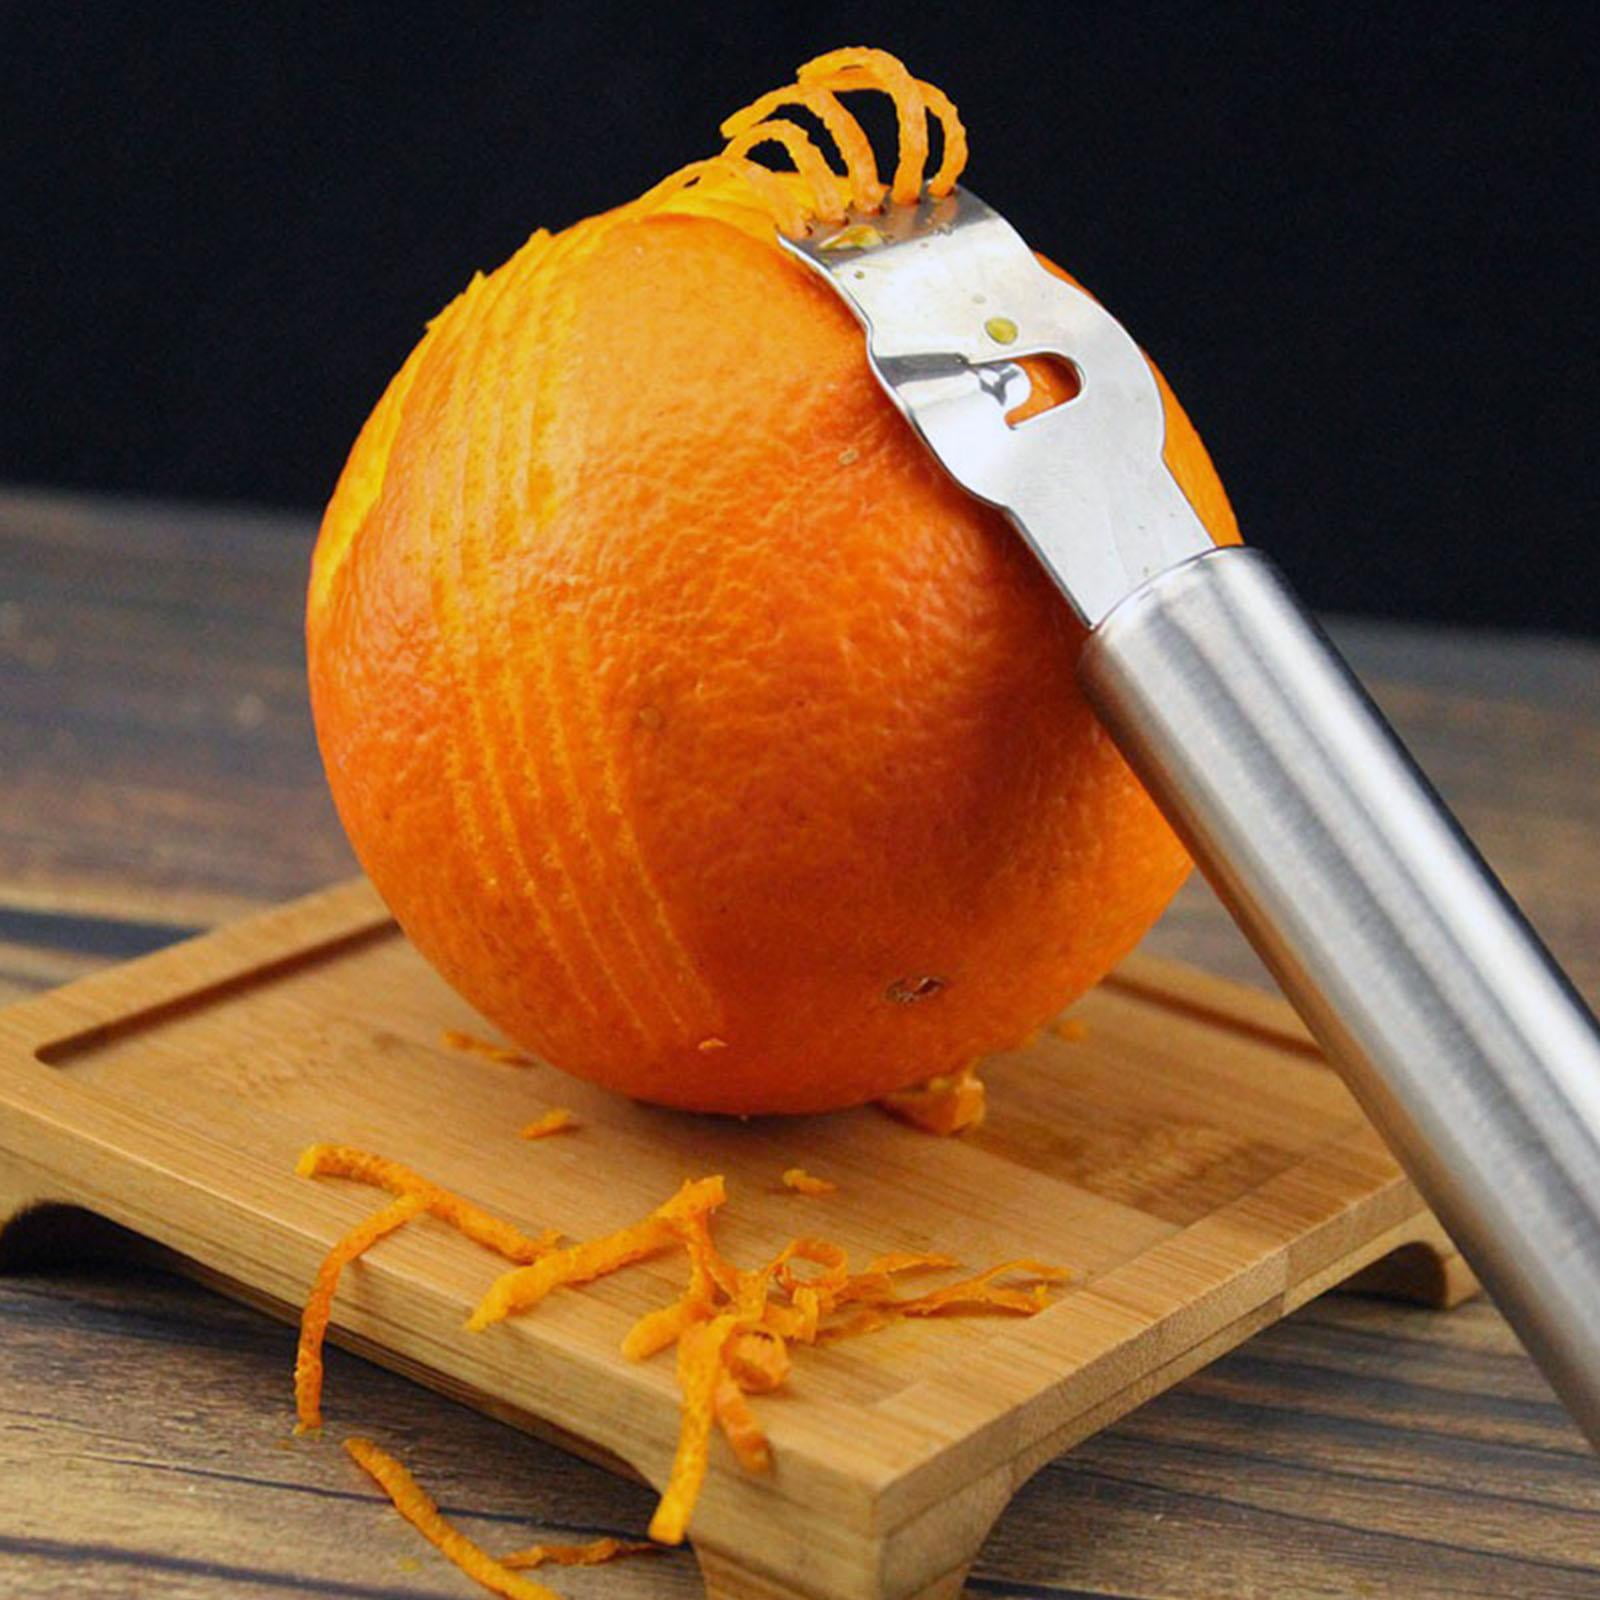  SupMaka Orange Peeler Metal - 2 Pcs Grapefruit Knife 304  Stainless Steel Handle Citrus Peeler Remover for Cocktails, Household Fruit  Tools, Kitchen Gadgets: Home & Kitchen